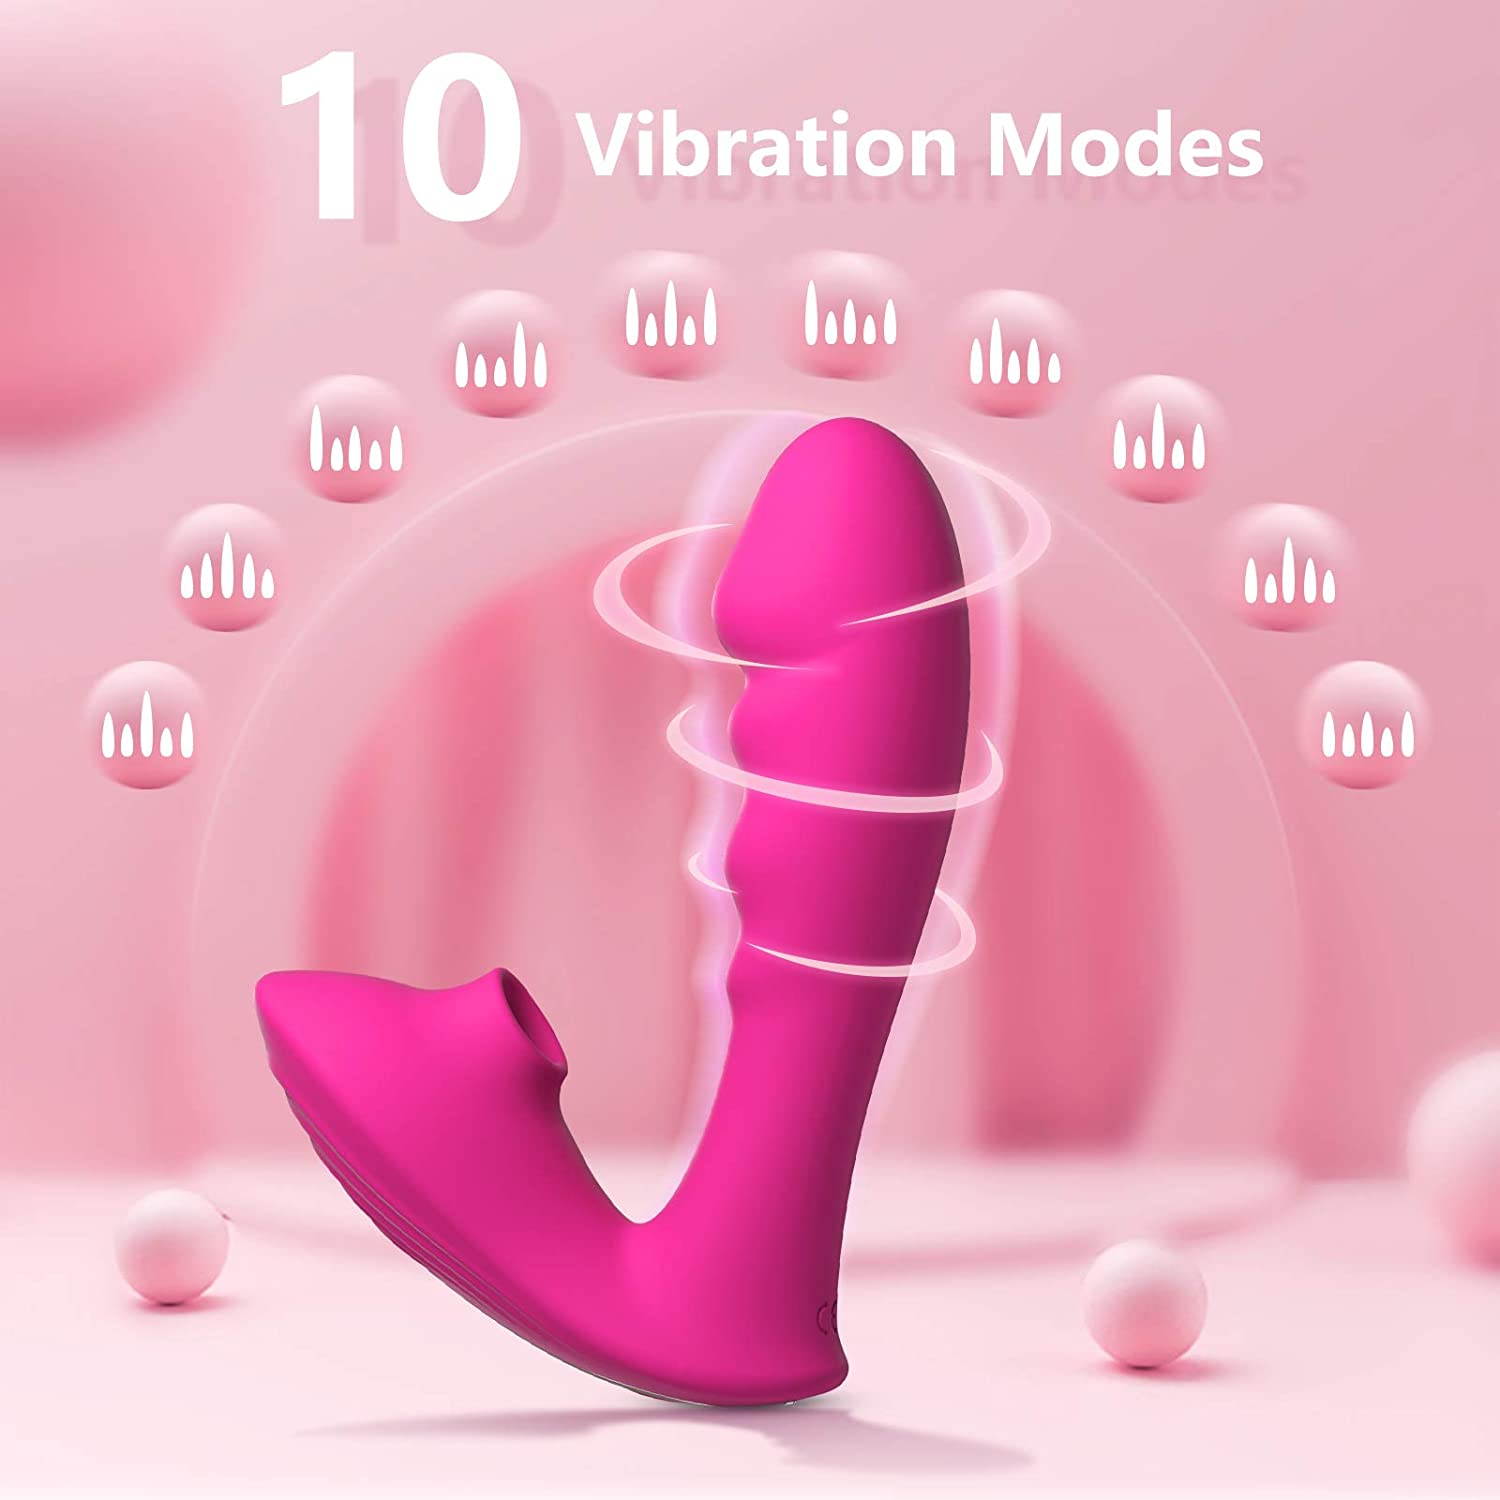 lay-on vibrator